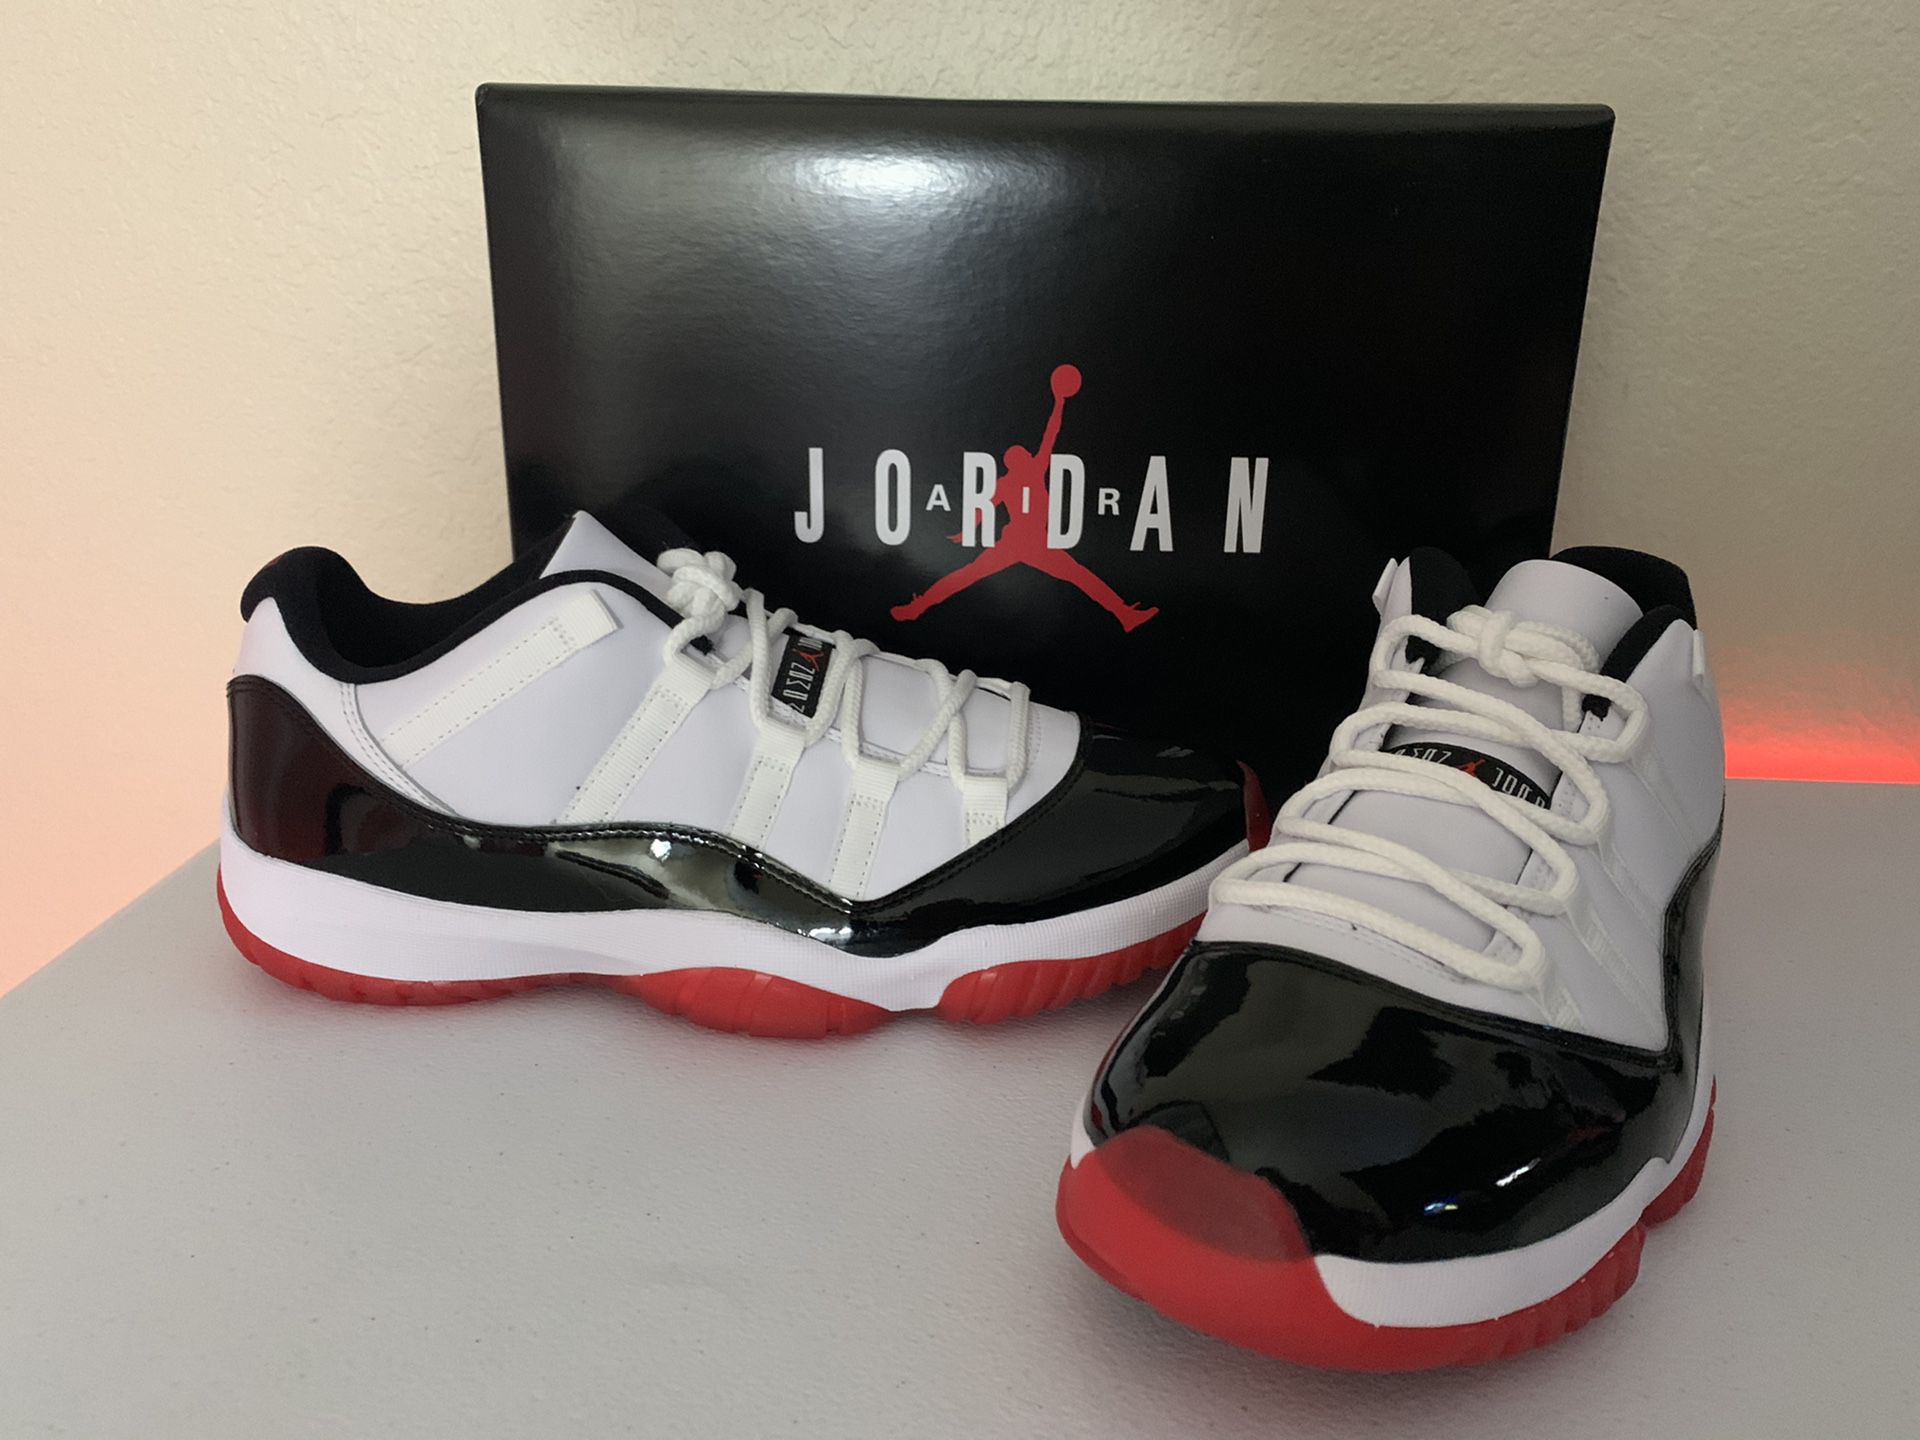 Jordan 11 low concord bred size 11.5